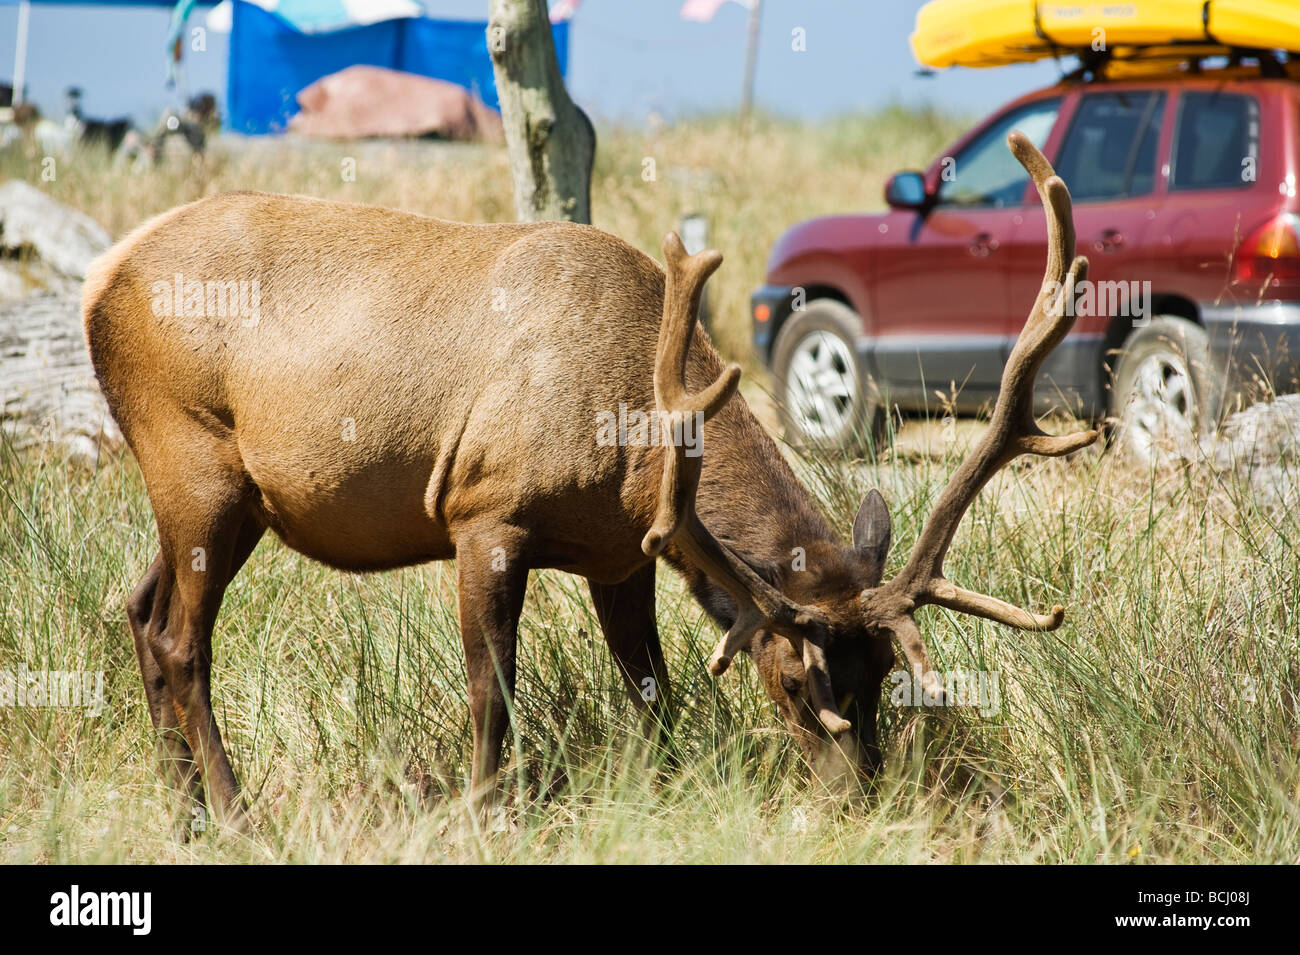 Roosevelt elk - Cervus canadensis roosevelti - in campground at Gold Bluffs Beach, Prairie Creek Redwoods state park, California Stock Photo